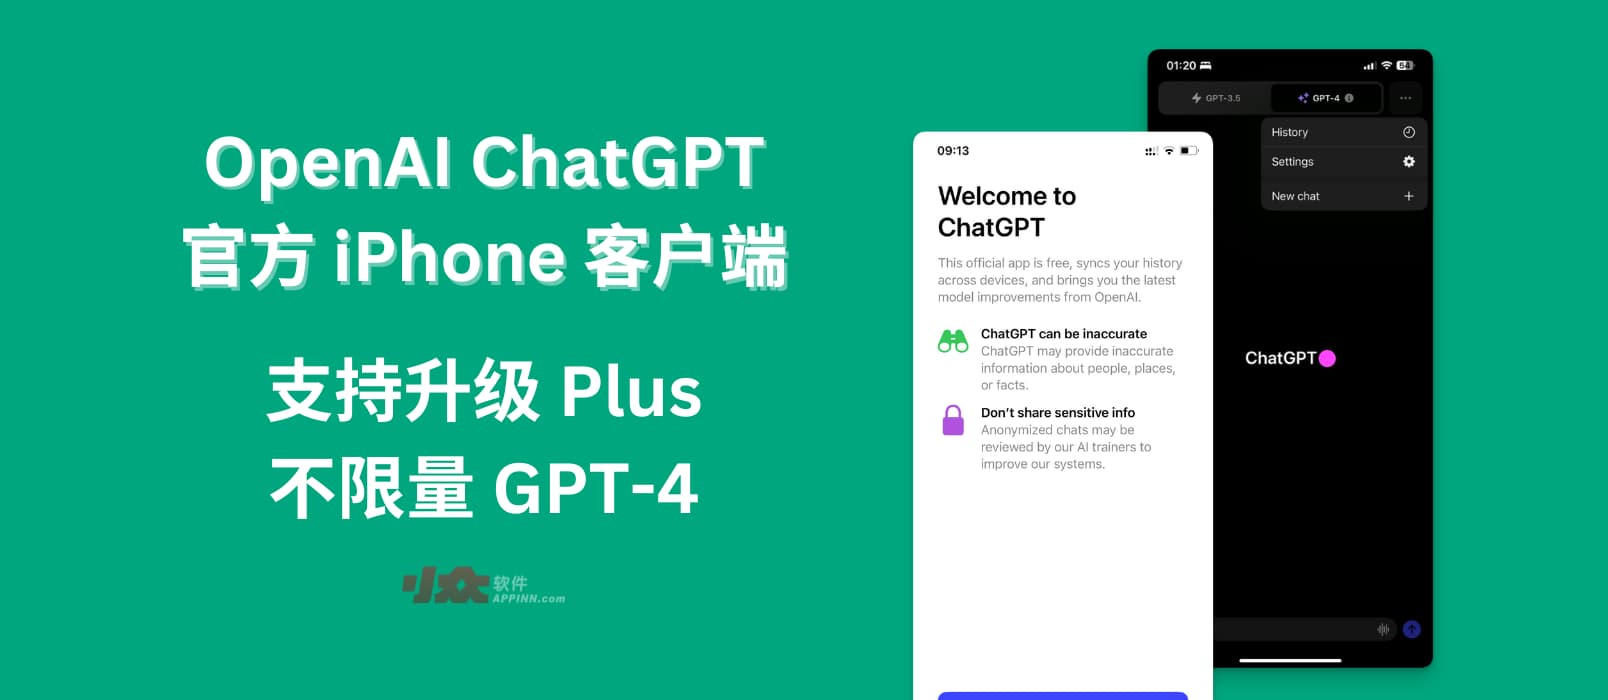 OpenAI ChatGPT 官方 iPhone 客户端发布，支持升级 Plus，不限量 GPT-4 1